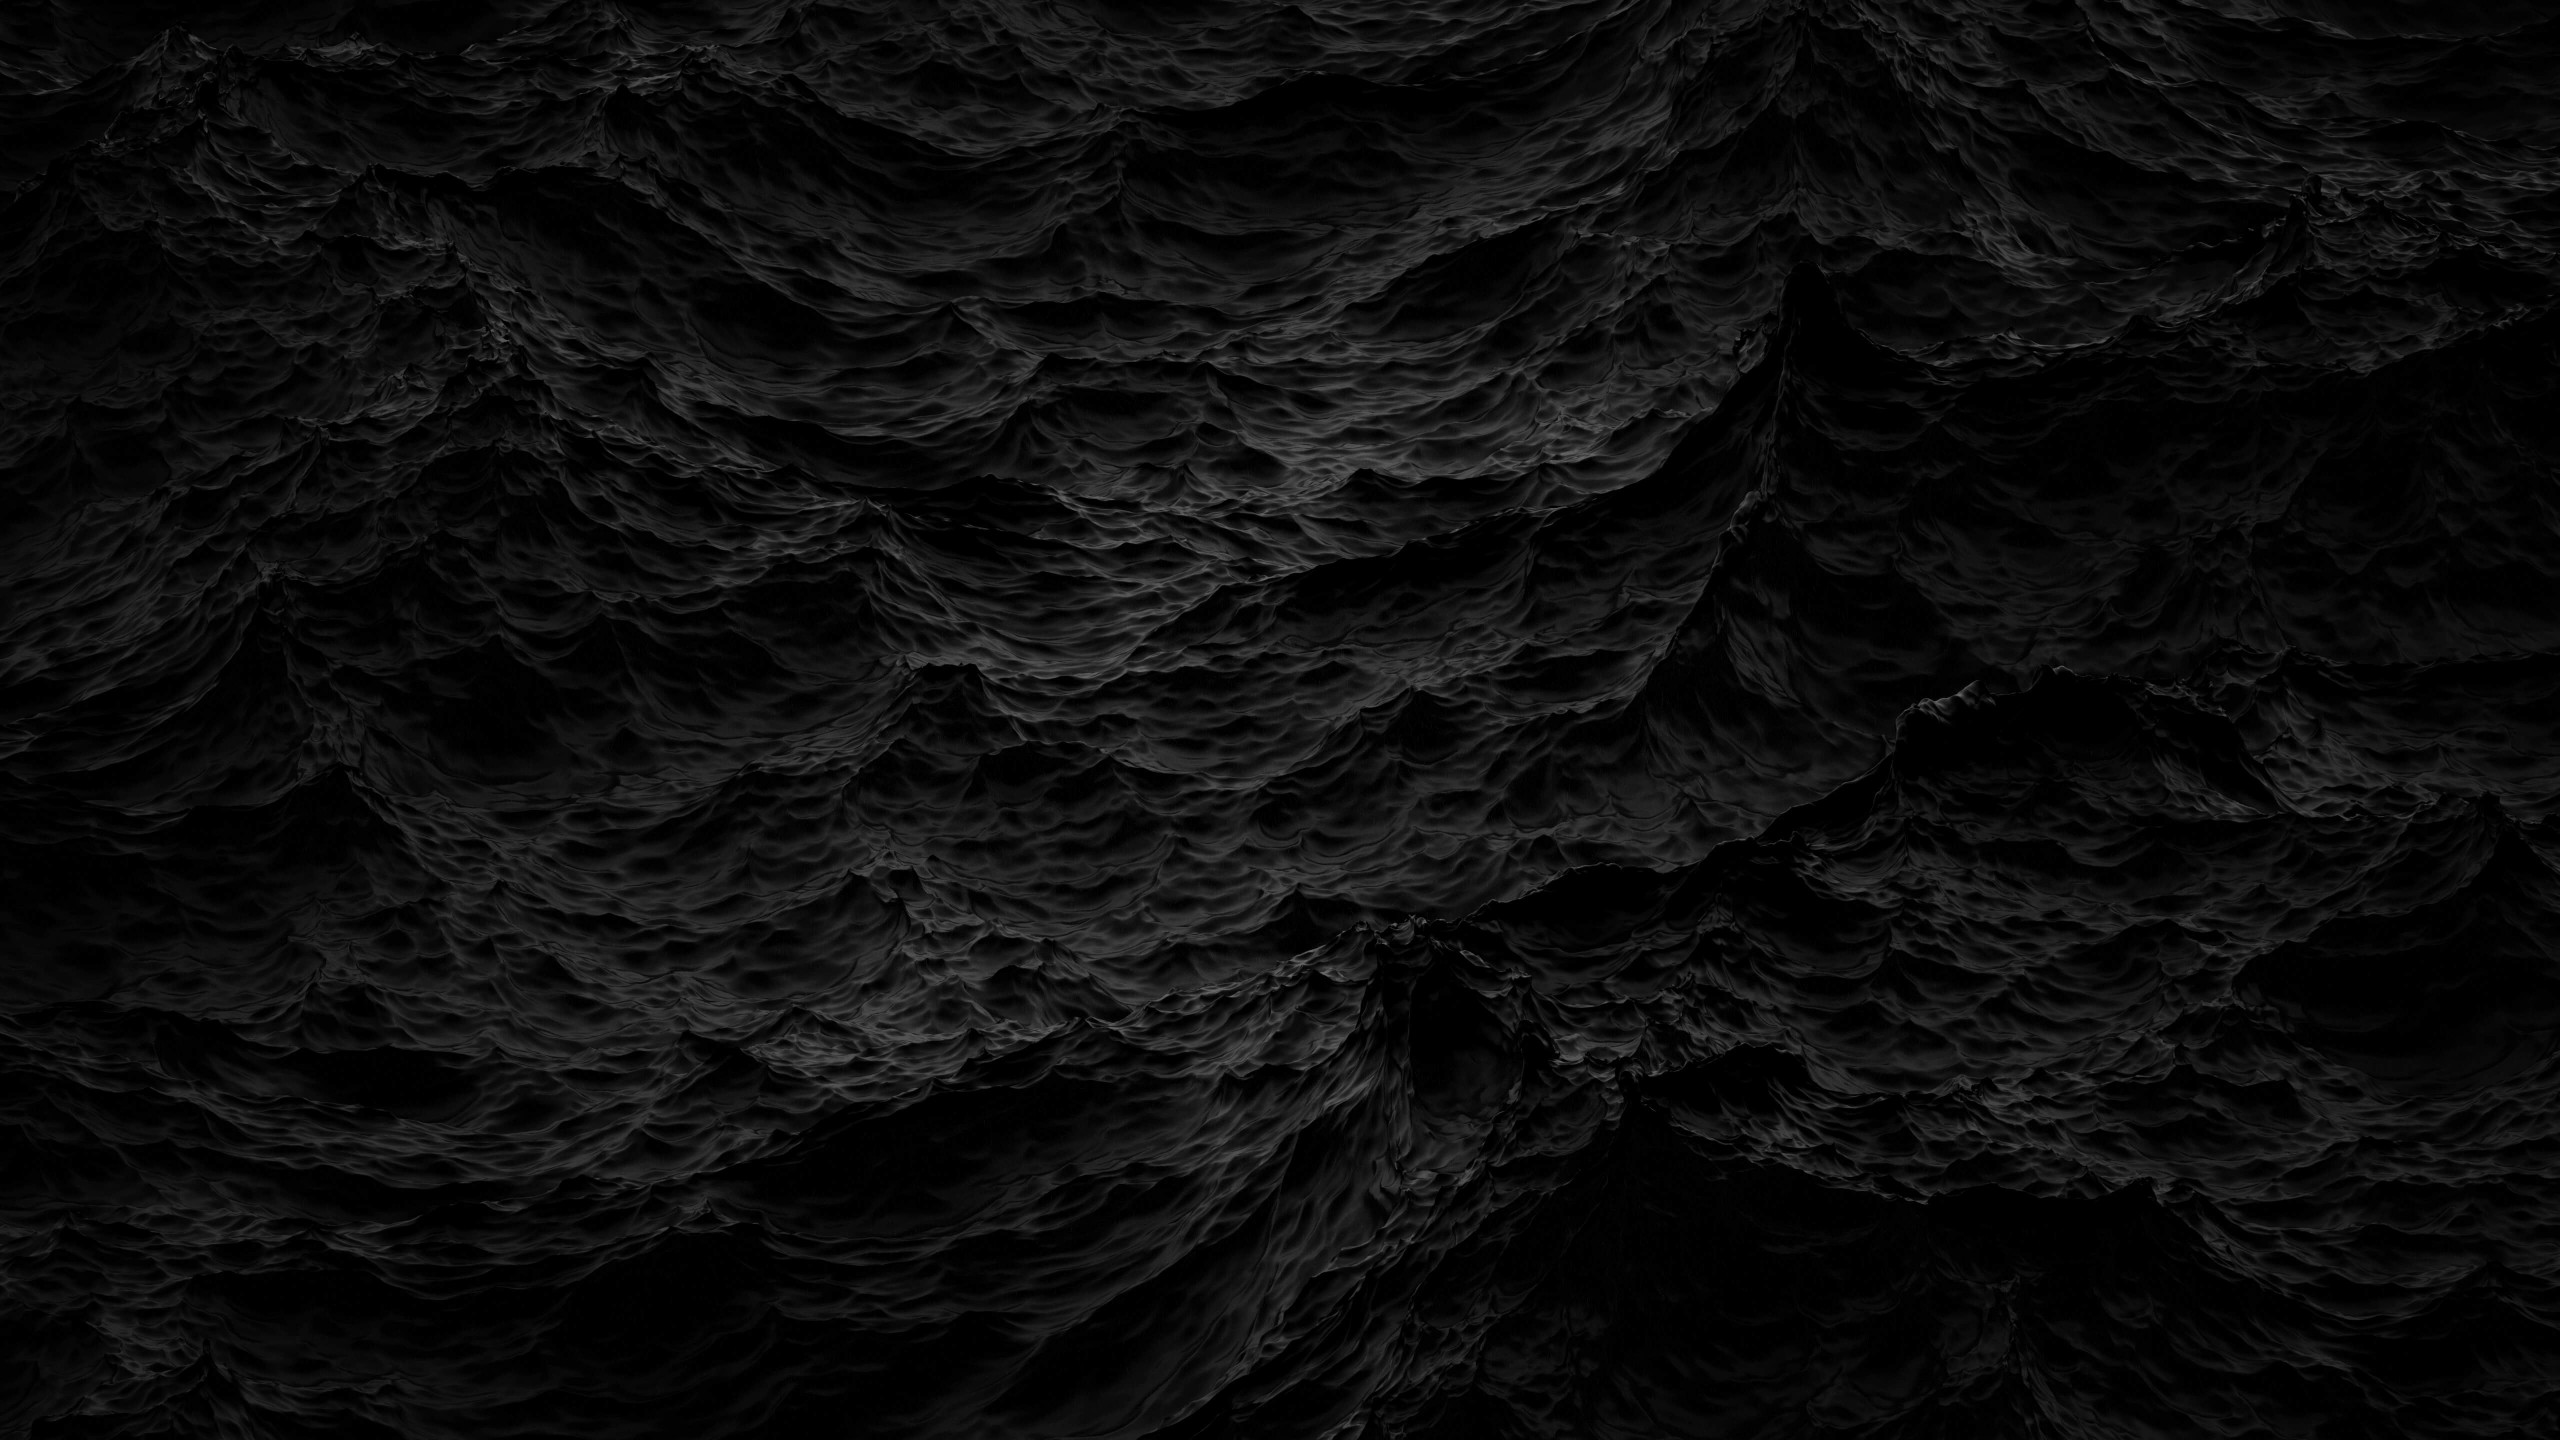 Black Waves Wallpaper for Desktop 2560x1440